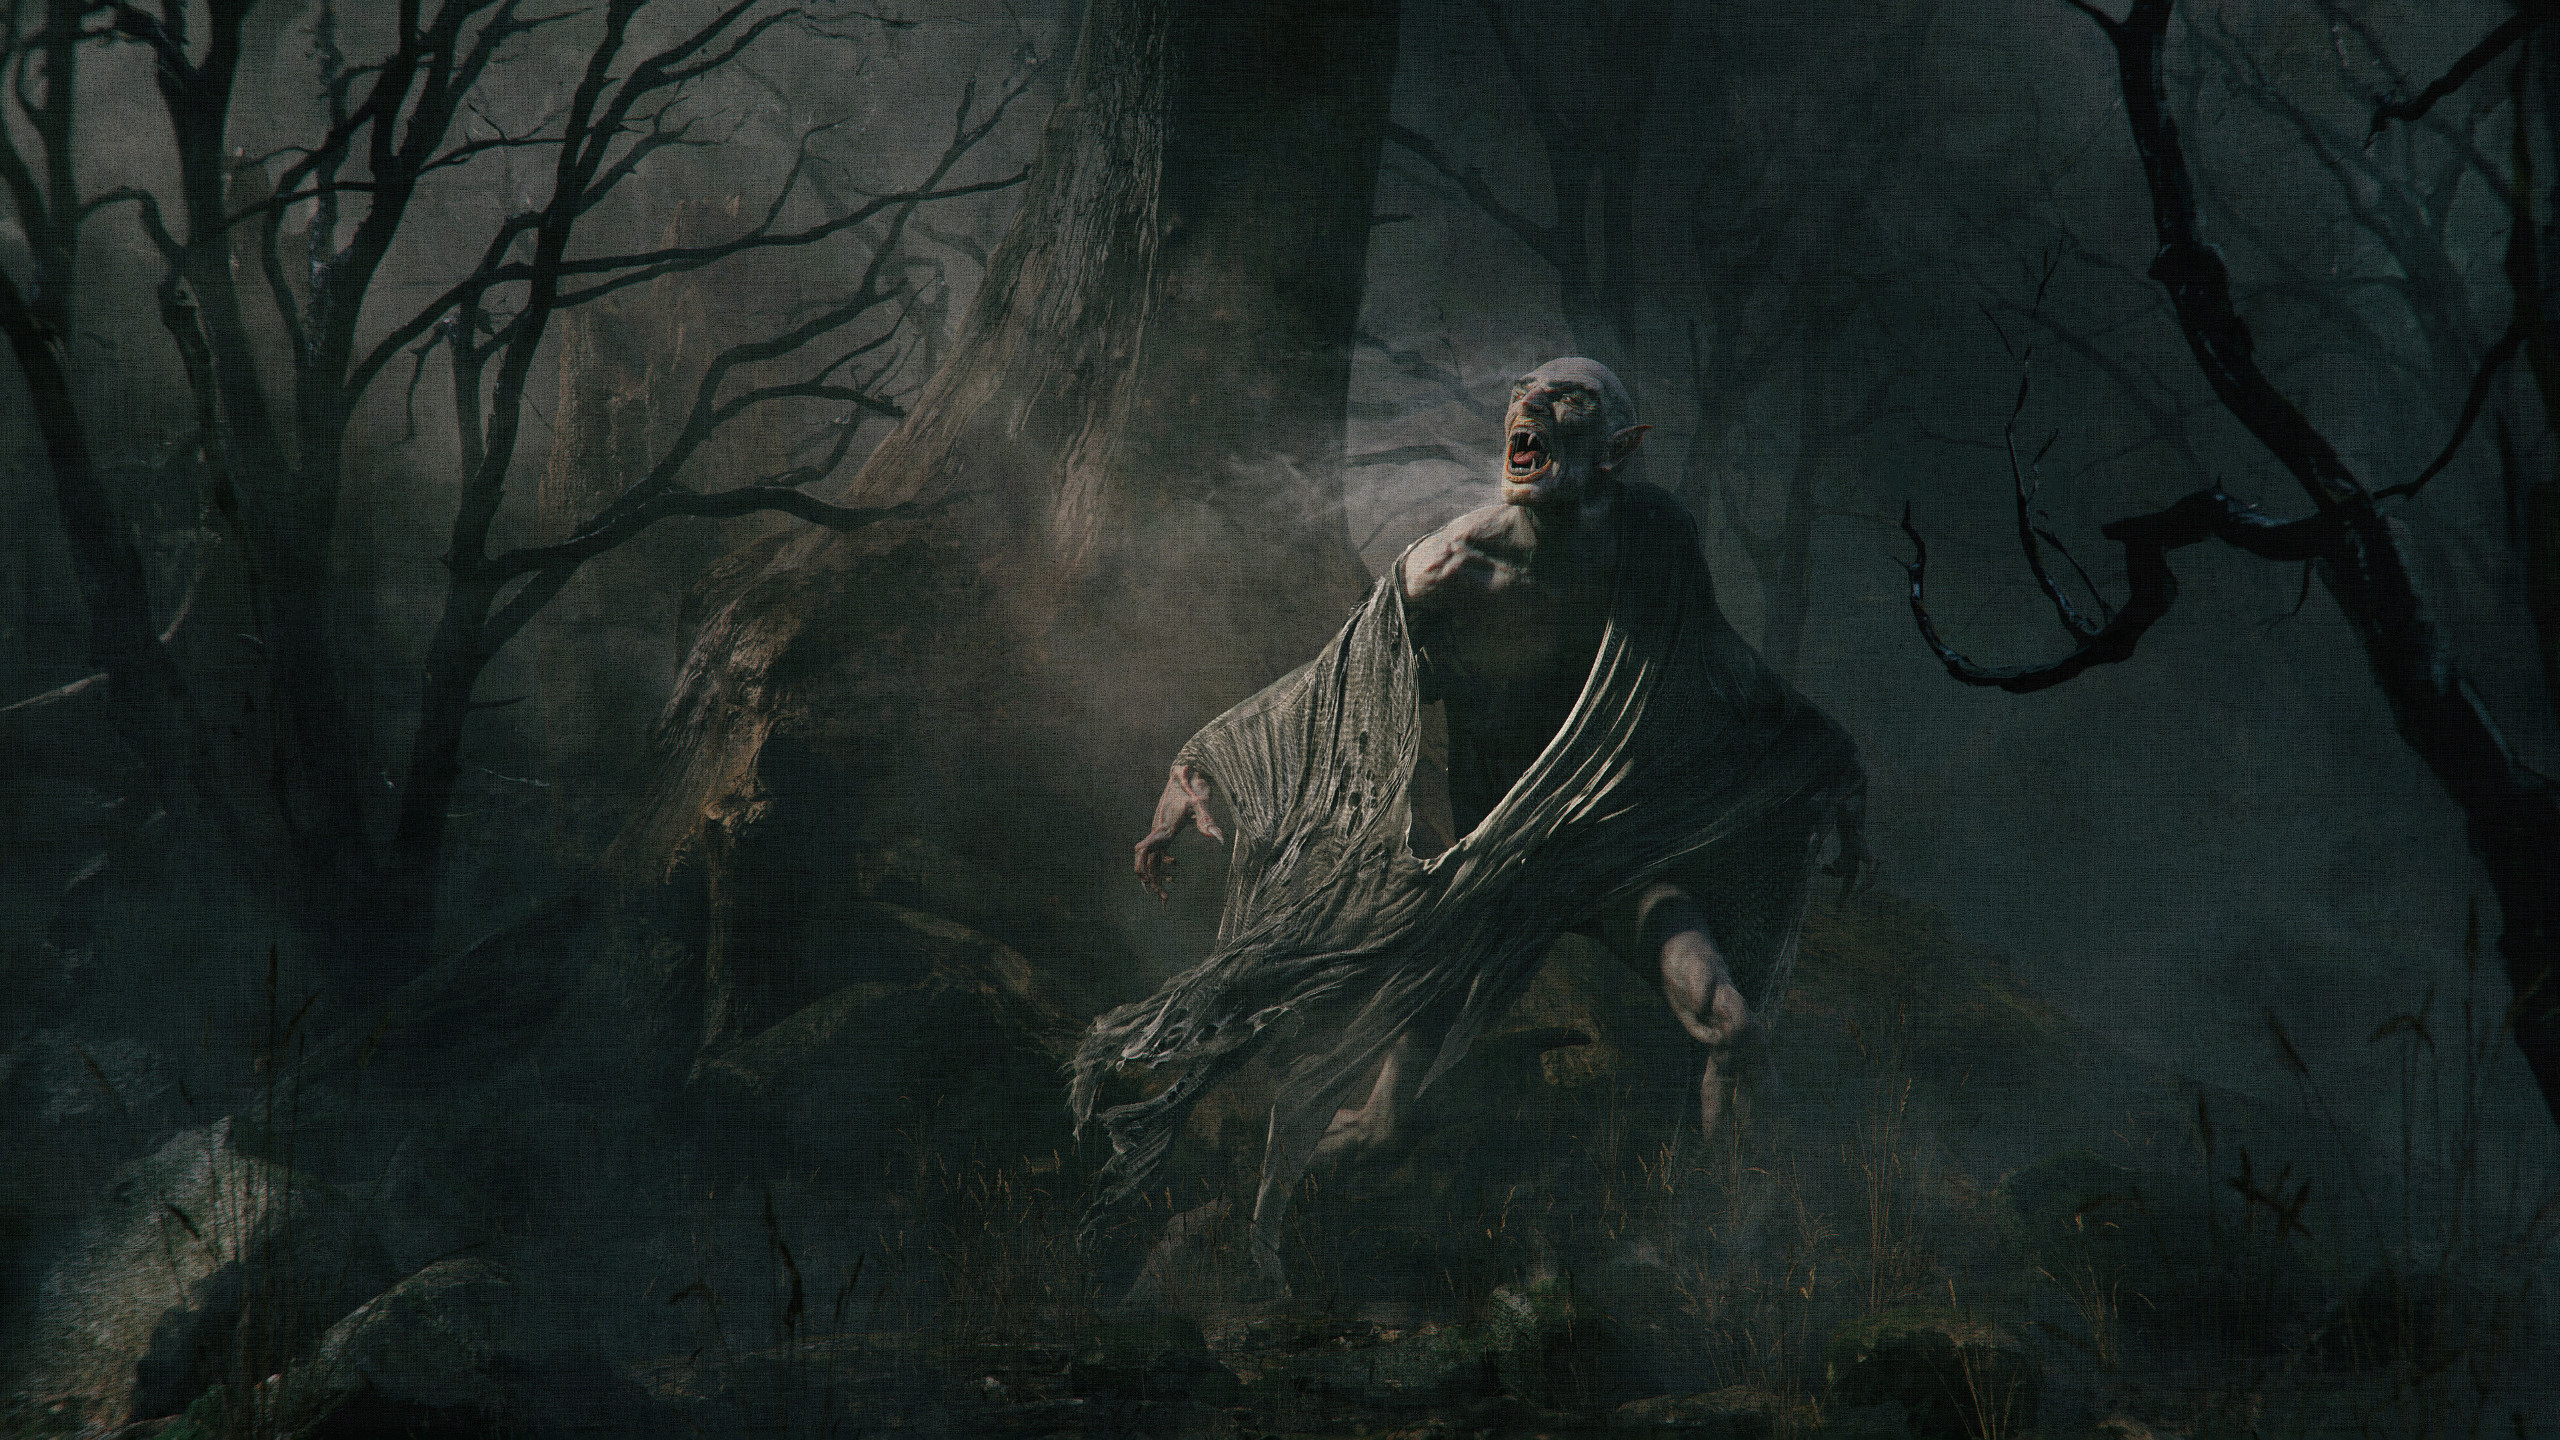 General 2560x1440 dark fantasy fantasy art forest creature vampires Nosferatu digital art